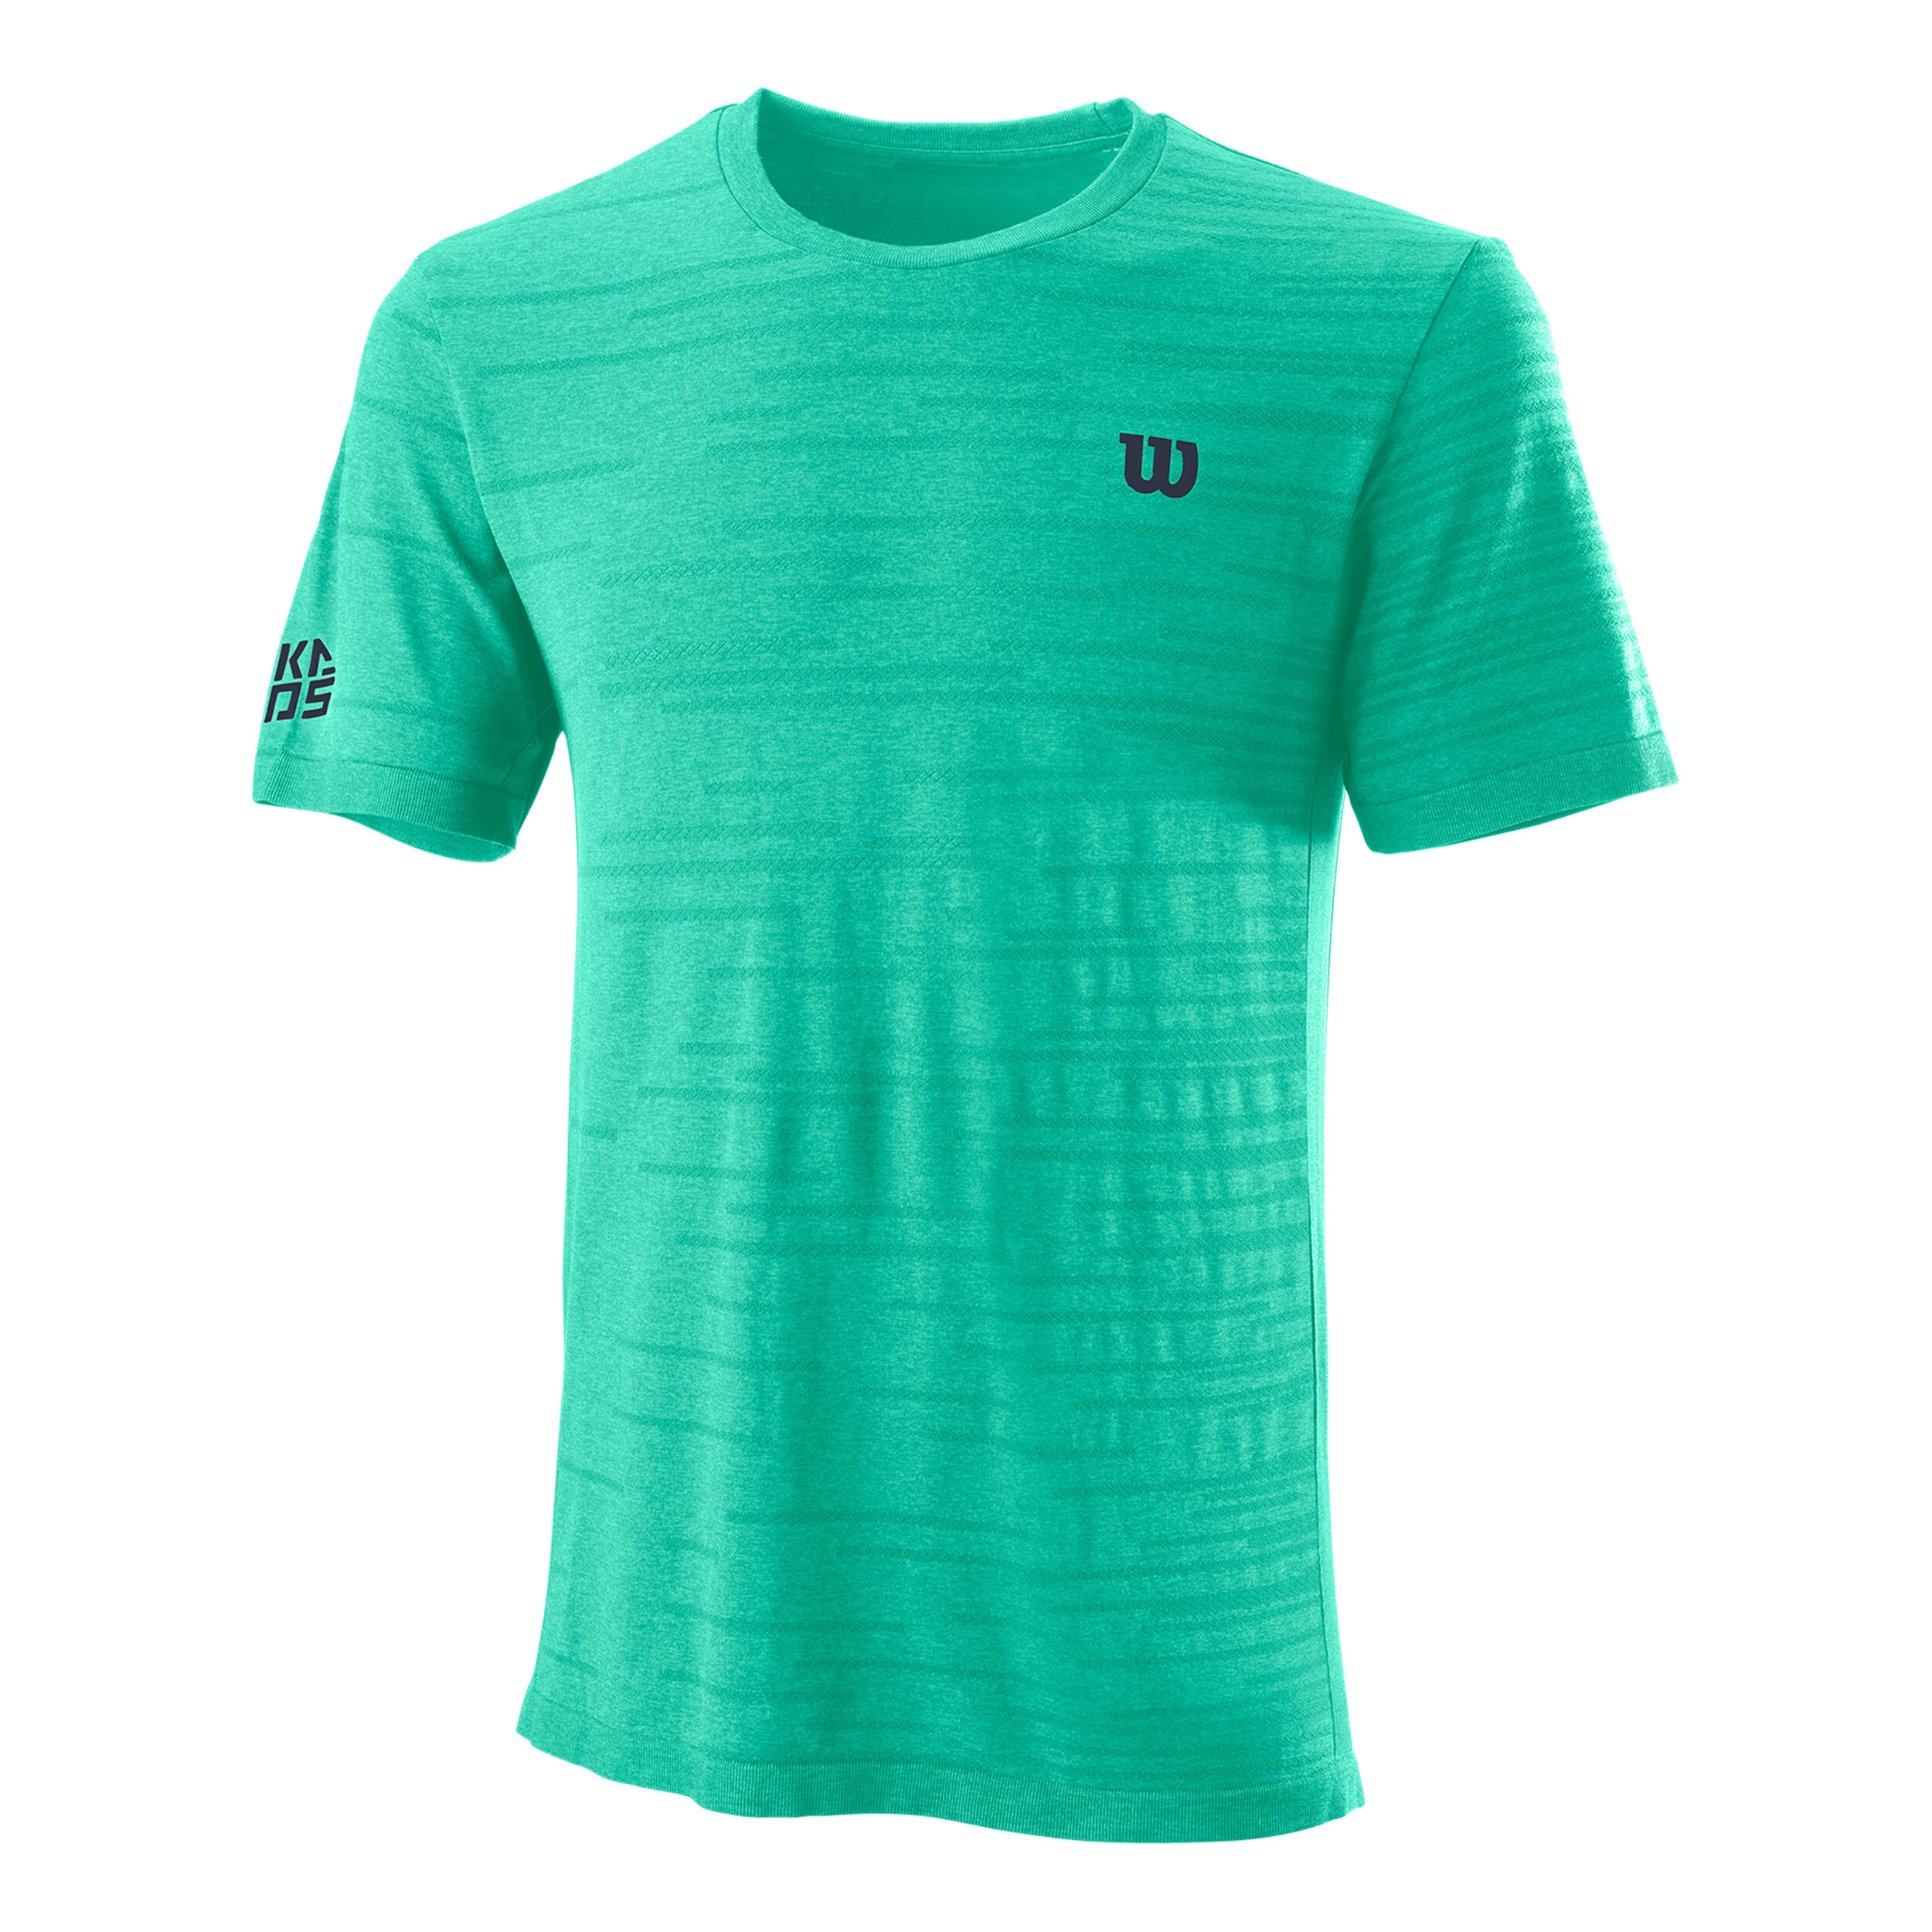 Wilson Homme T-Shirt KAOS RAPIDE SMLS CREW Polyester/Nylon 